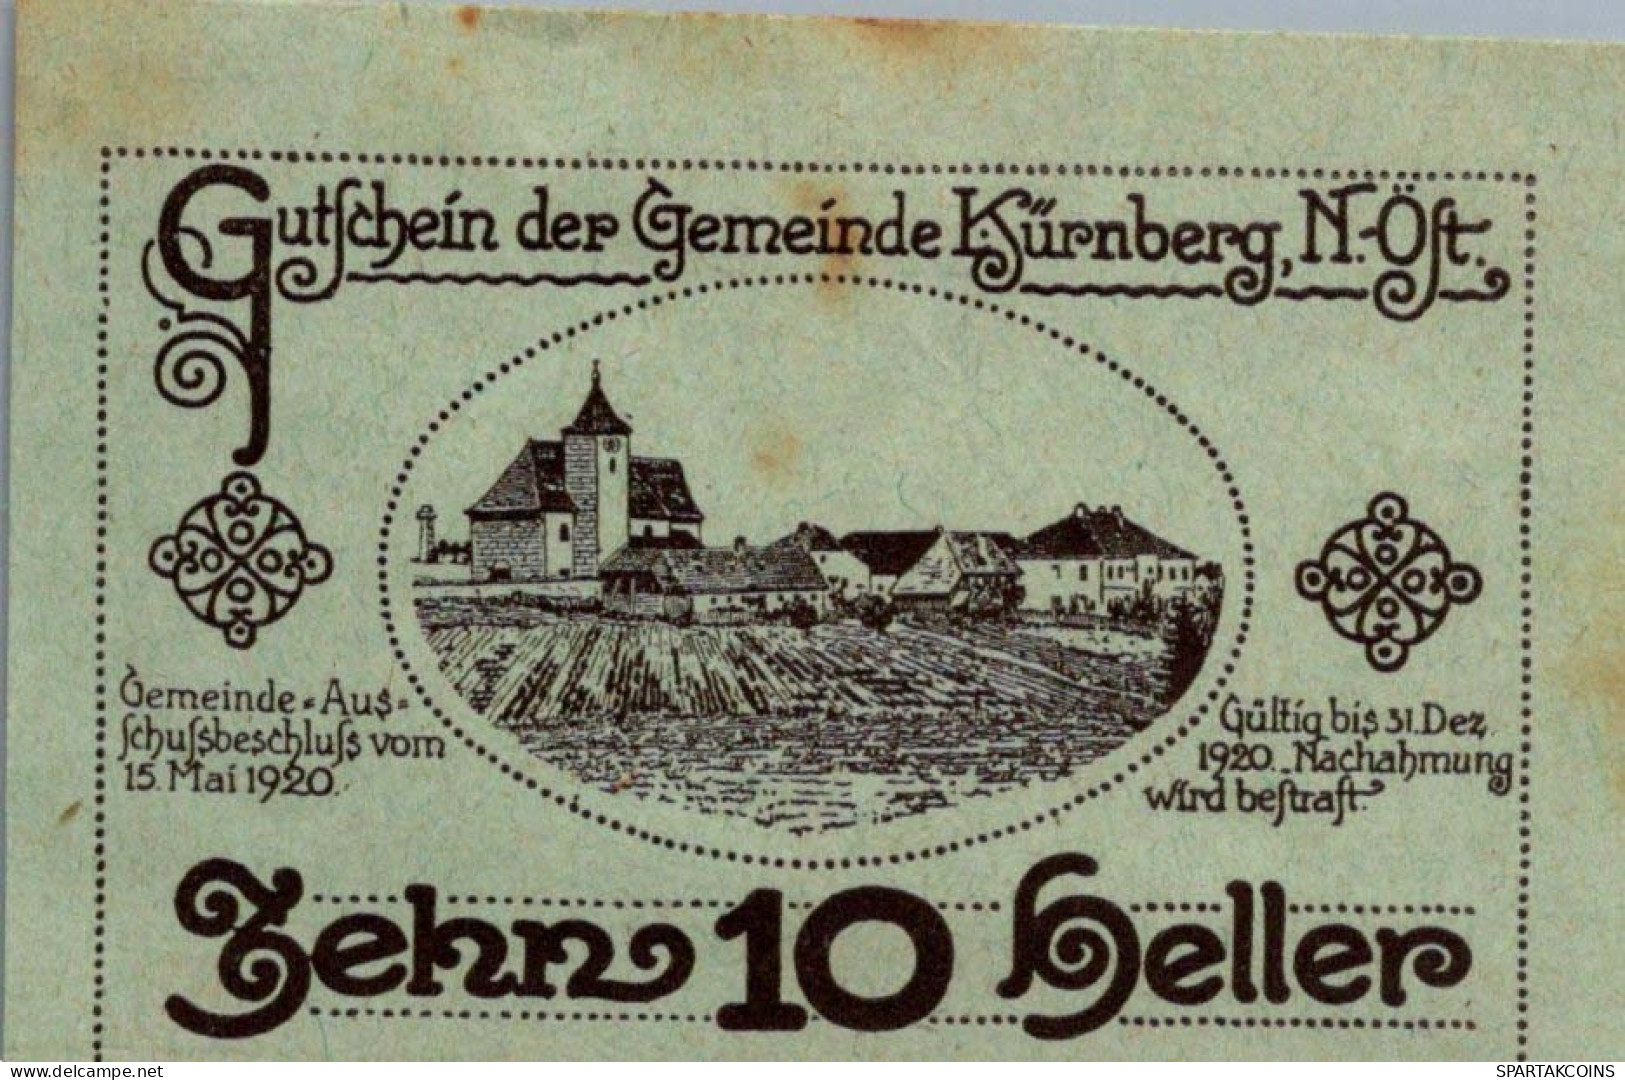 10 HELLER 1920 Stadt KÜRNBERG Niedrigeren Österreich Notgeld Papiergeld Banknote #PG920 - [11] Local Banknote Issues